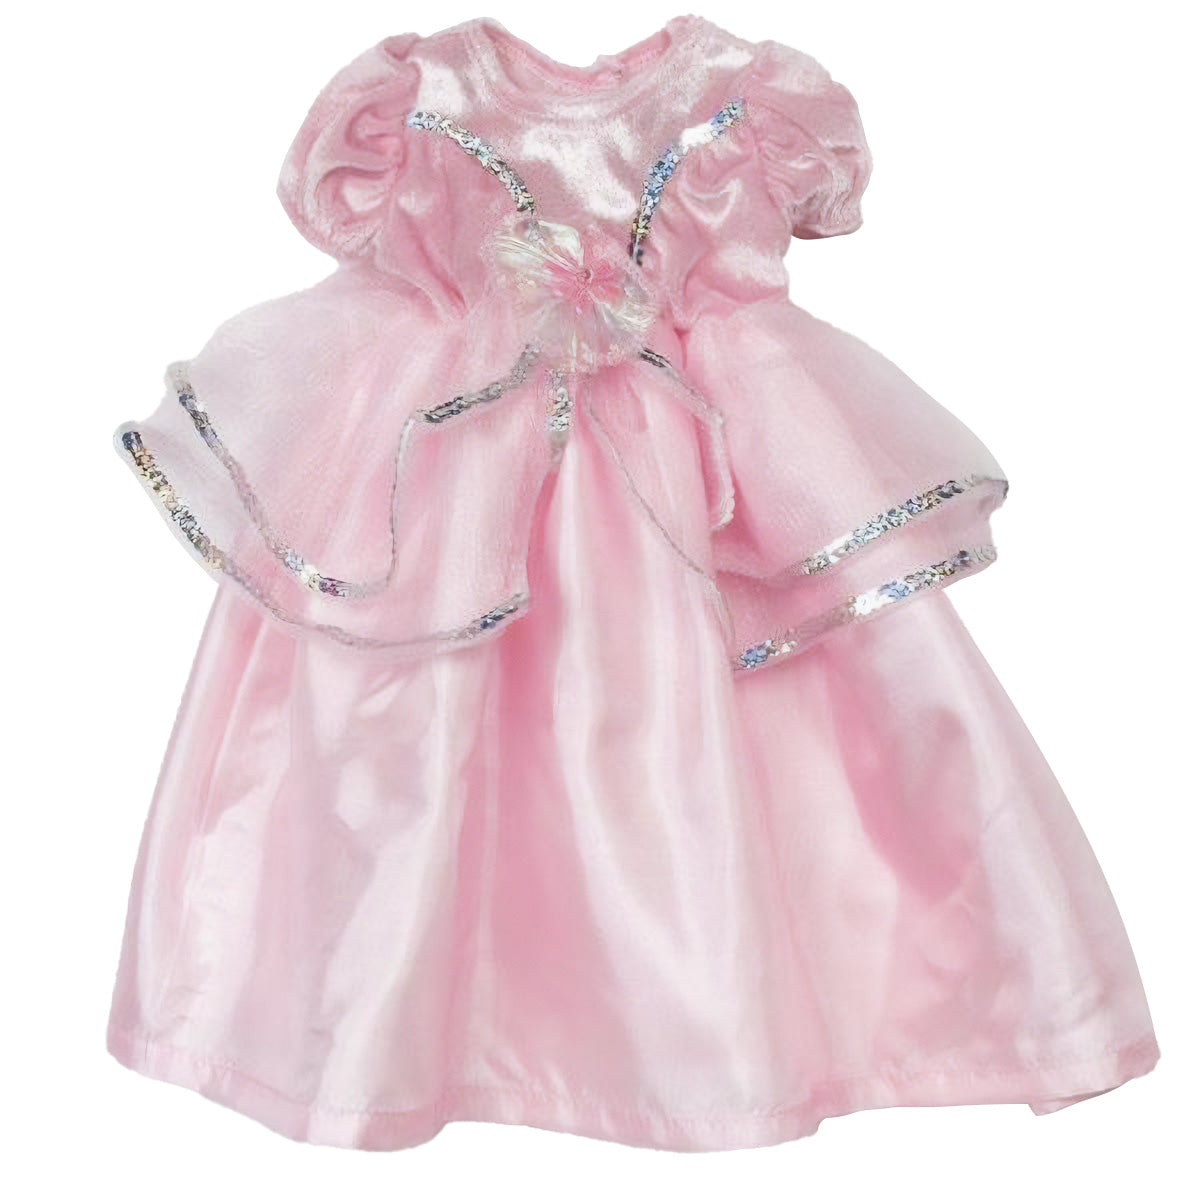 Lil Doll Dress Royal Pink Princess Fits 16-20"